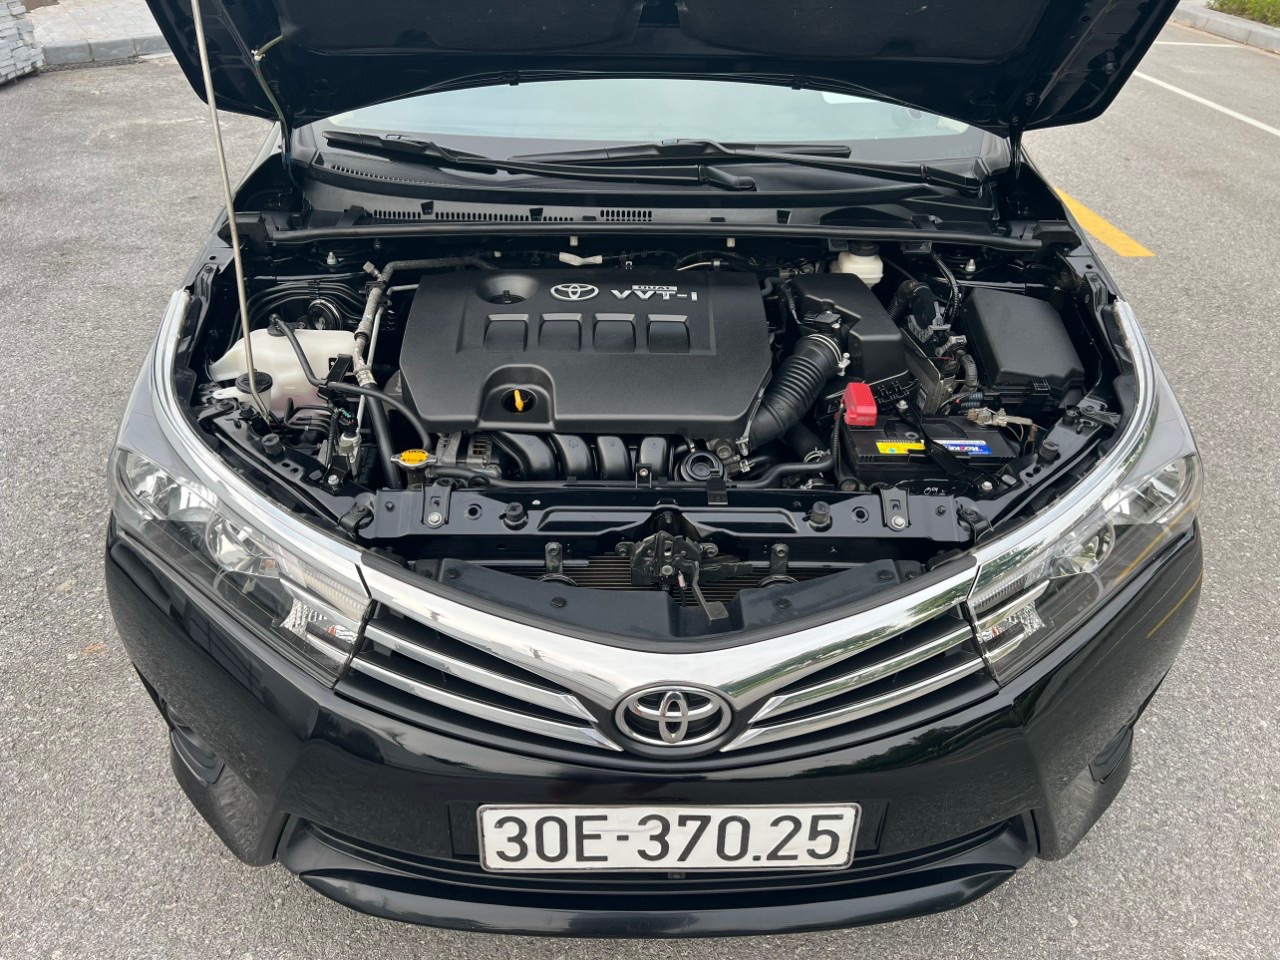 Cần bán Toyota Atit sx 2016